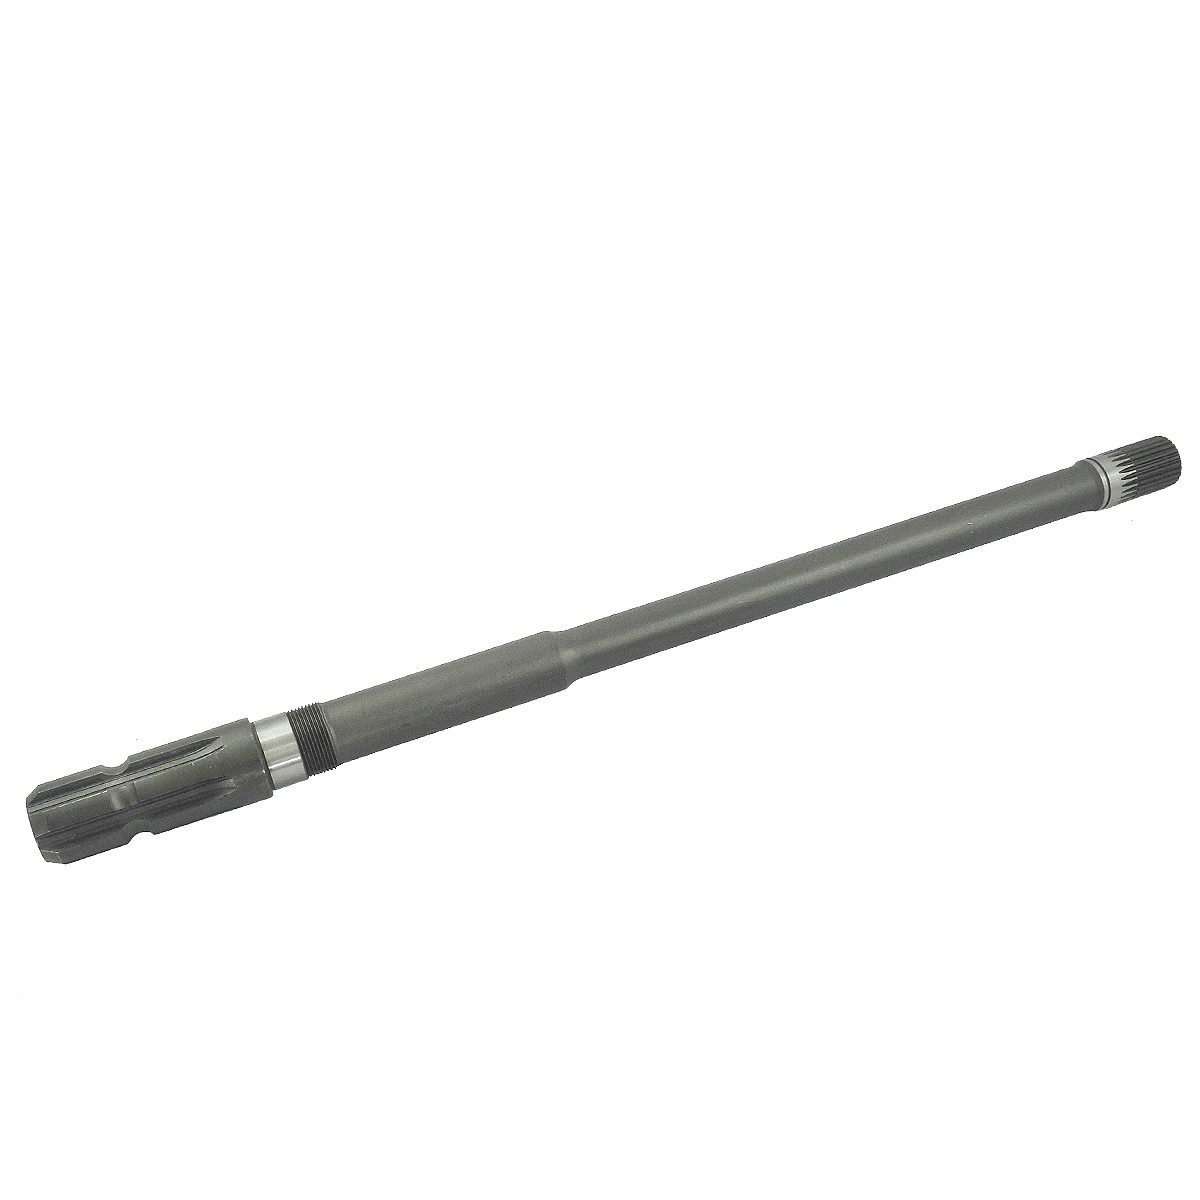 PTO shaft / 540 mm / 6T/24T / Kubota L1500/L2000 / 34160-25312 / S.71941 / 5-01-207-02